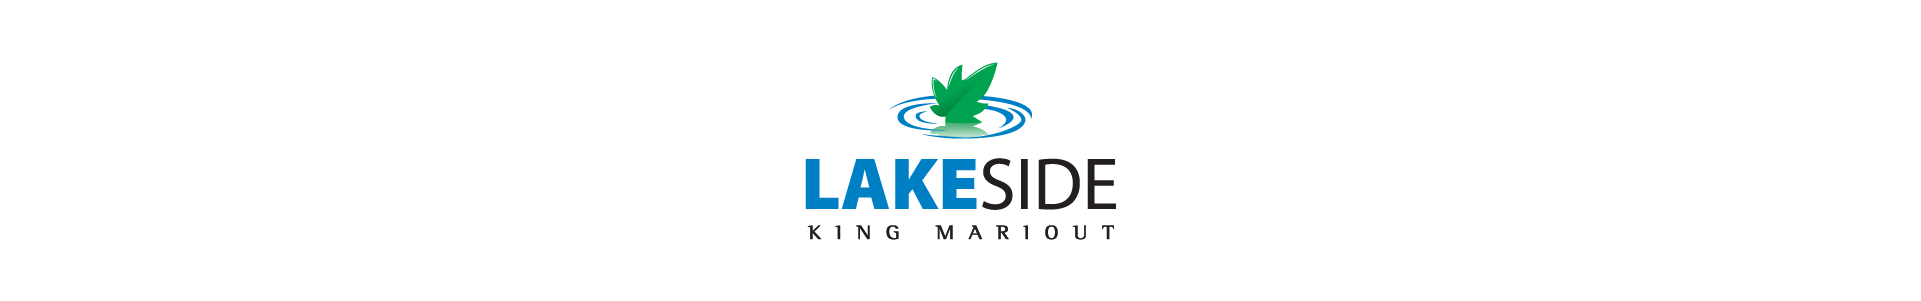 artlink advertising Communication lake side